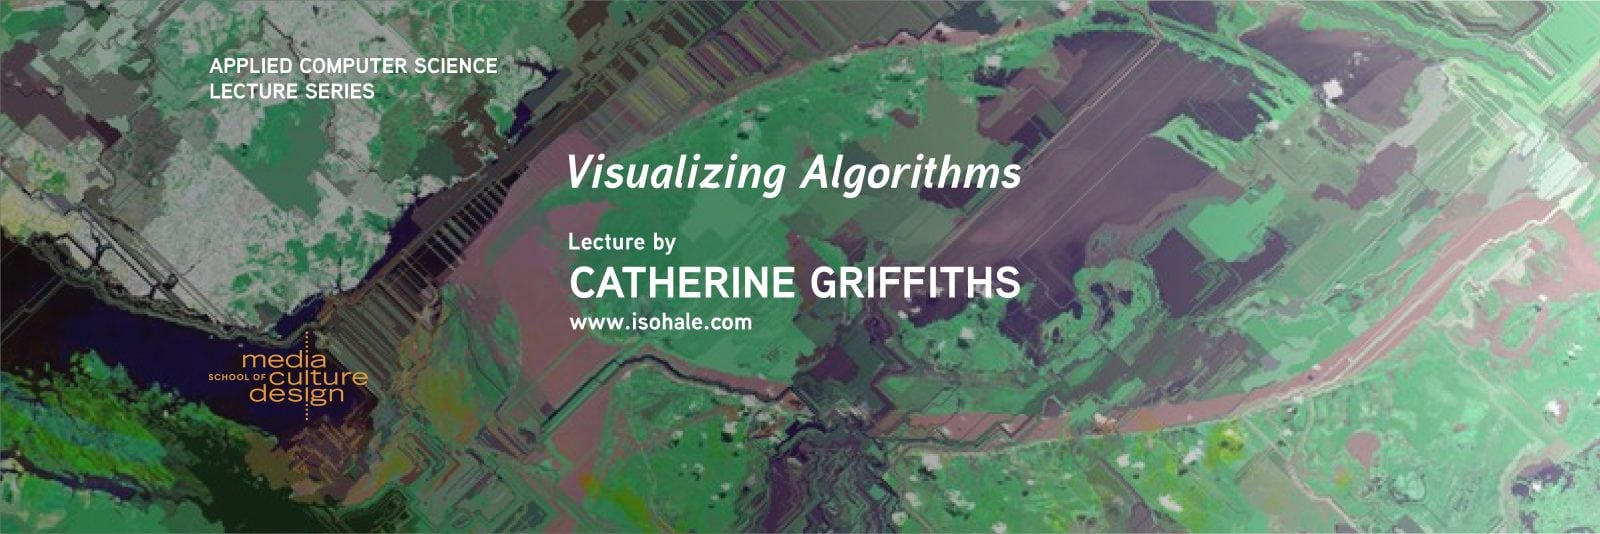 Catherine Griffiths on Visualizing Algorithms